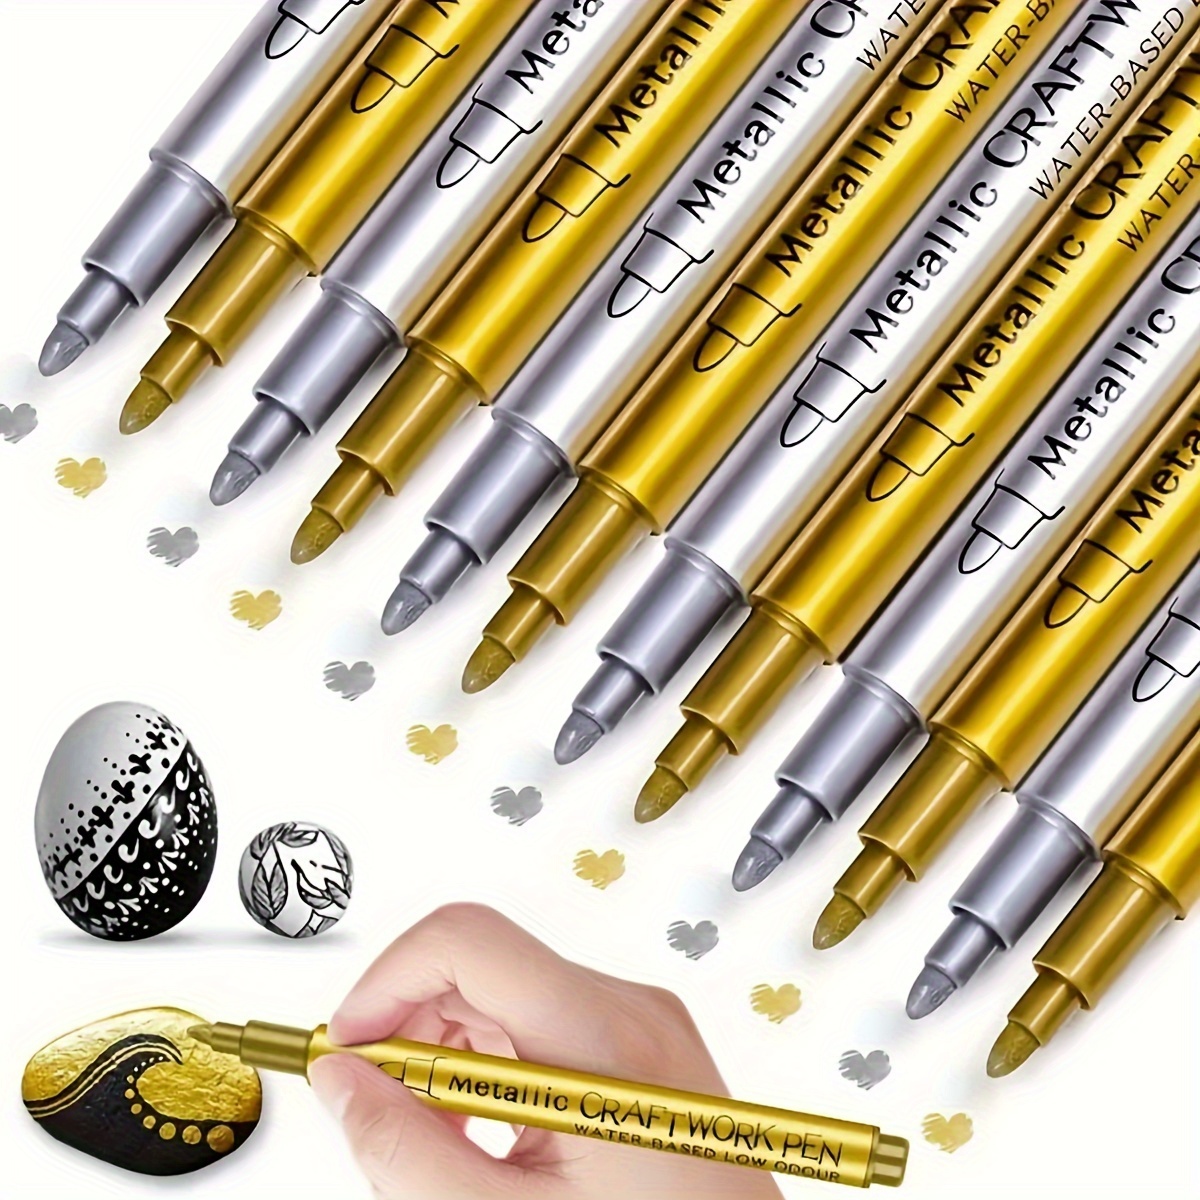  12PCS Metallic Craftwork Pen Metallic Marker Pens for Art Rock  Painting, Black Paper, Card Making, DIY Photo Album, Crafts, Metal,  Ceramics (Silver) : Arts, Crafts & Sewing